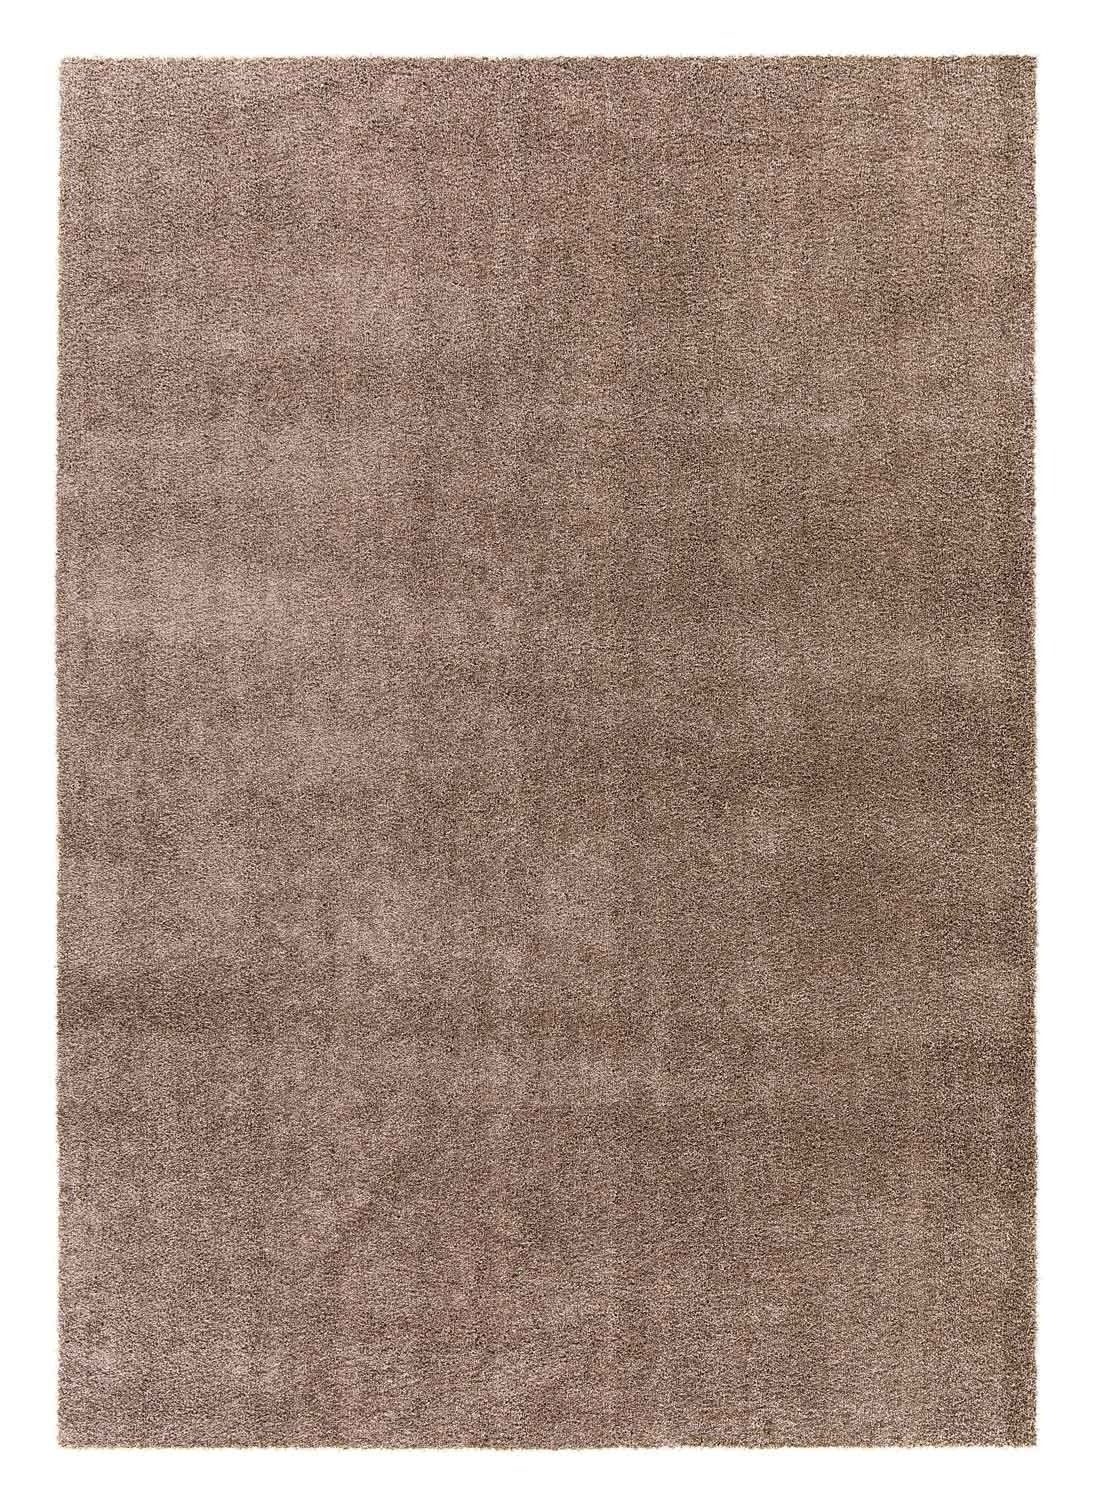 Teppich DOLCE, Braun, 160 x 230 cm, Polypropylen, Uni, Balta Rugs,  rechteckig, Höhe: 12 mm